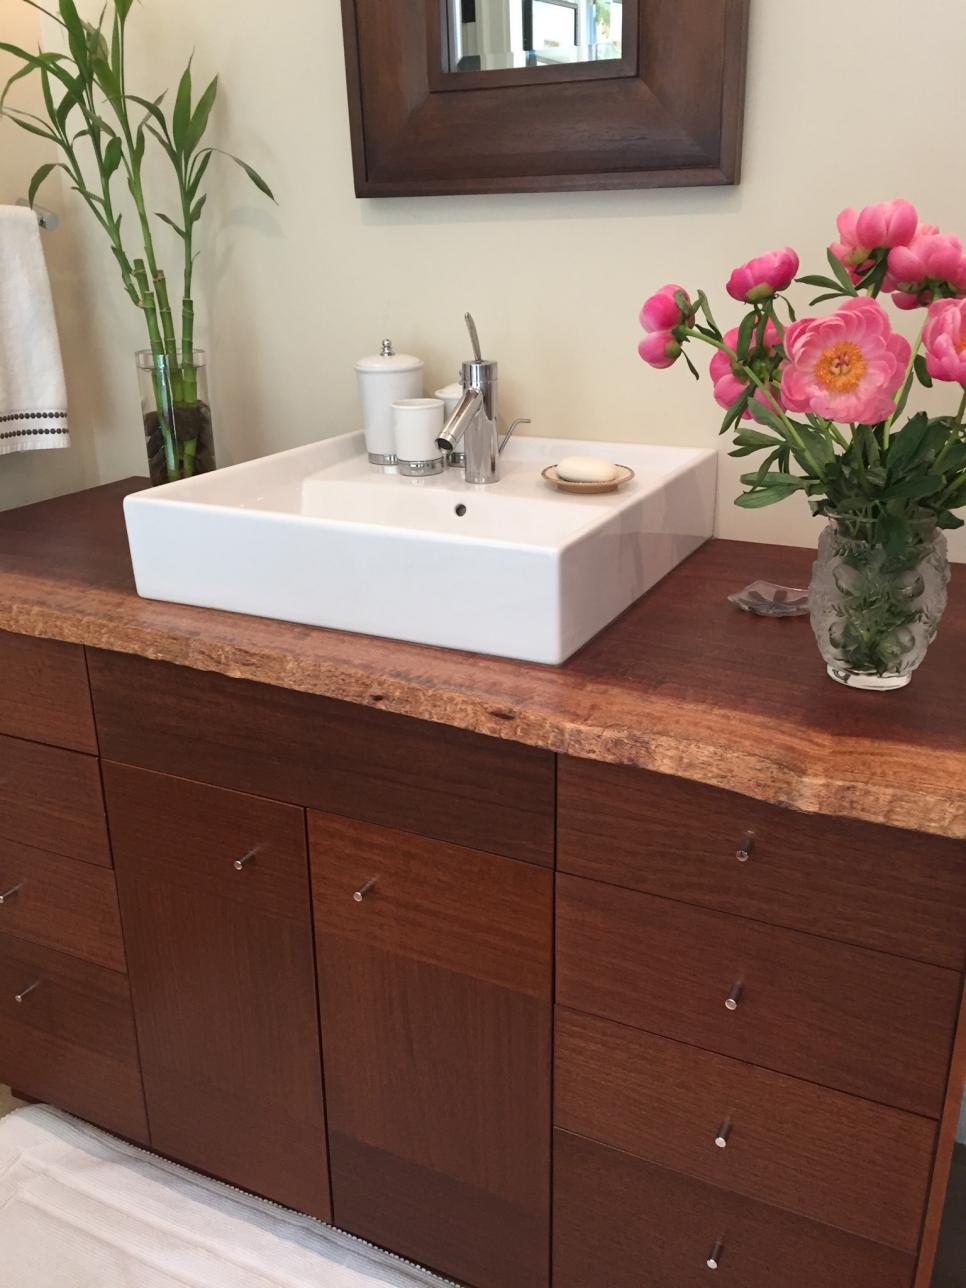 Rustic Bathroom Vanity with LiveEdge Wood Countertop and